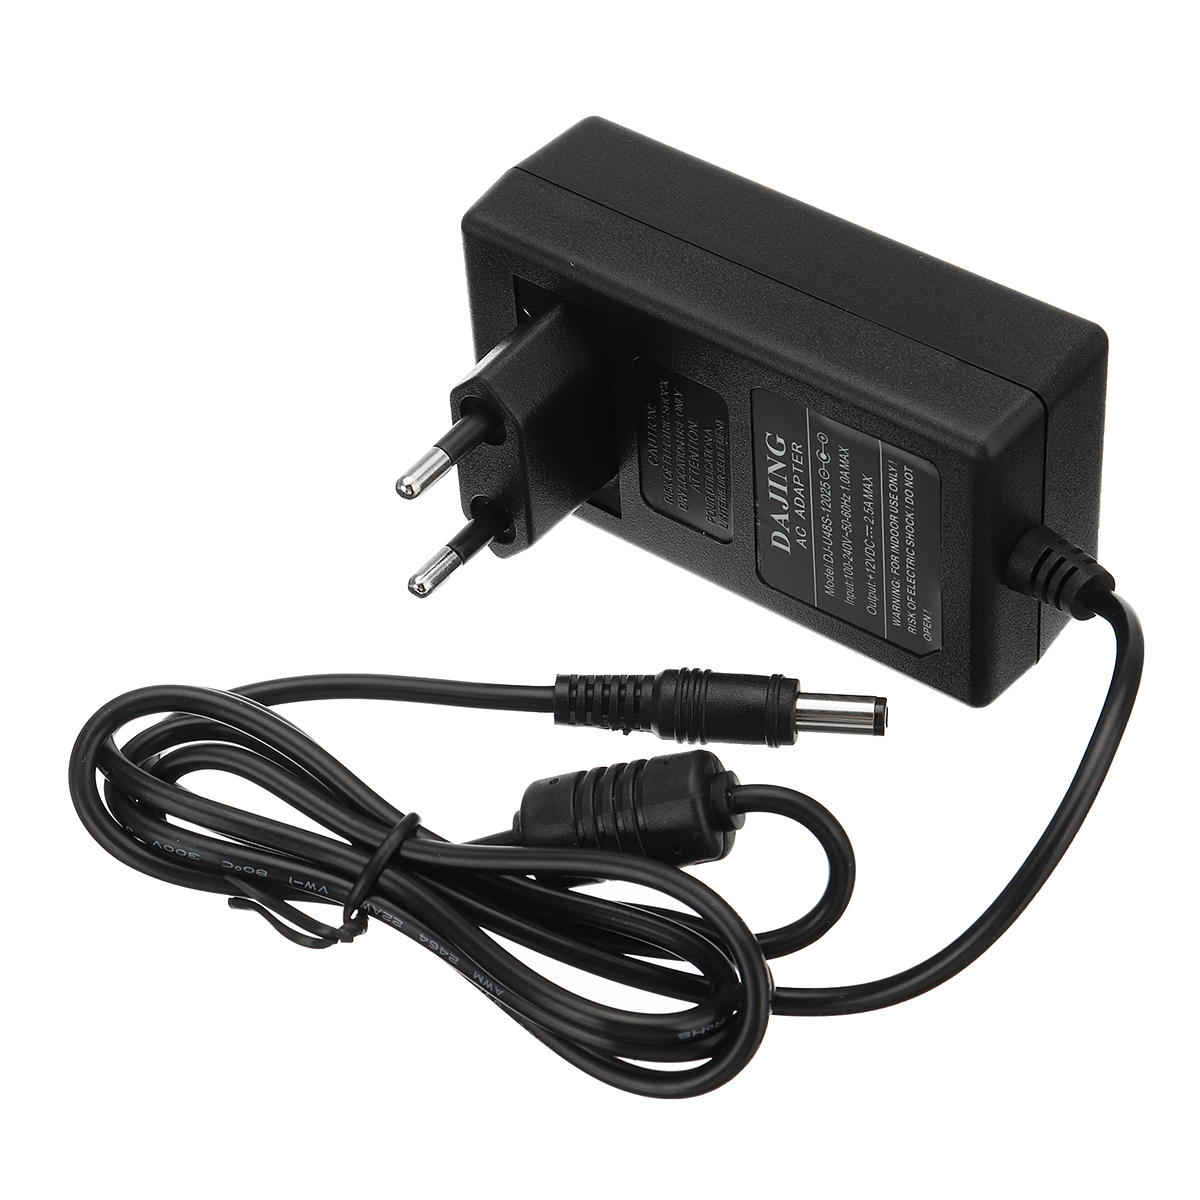 Power-20-Power-AC-Adapter-USEUAU-Plug-PC-Development-Kit-For-Xbox-One-SX-Kinect-1319225-5